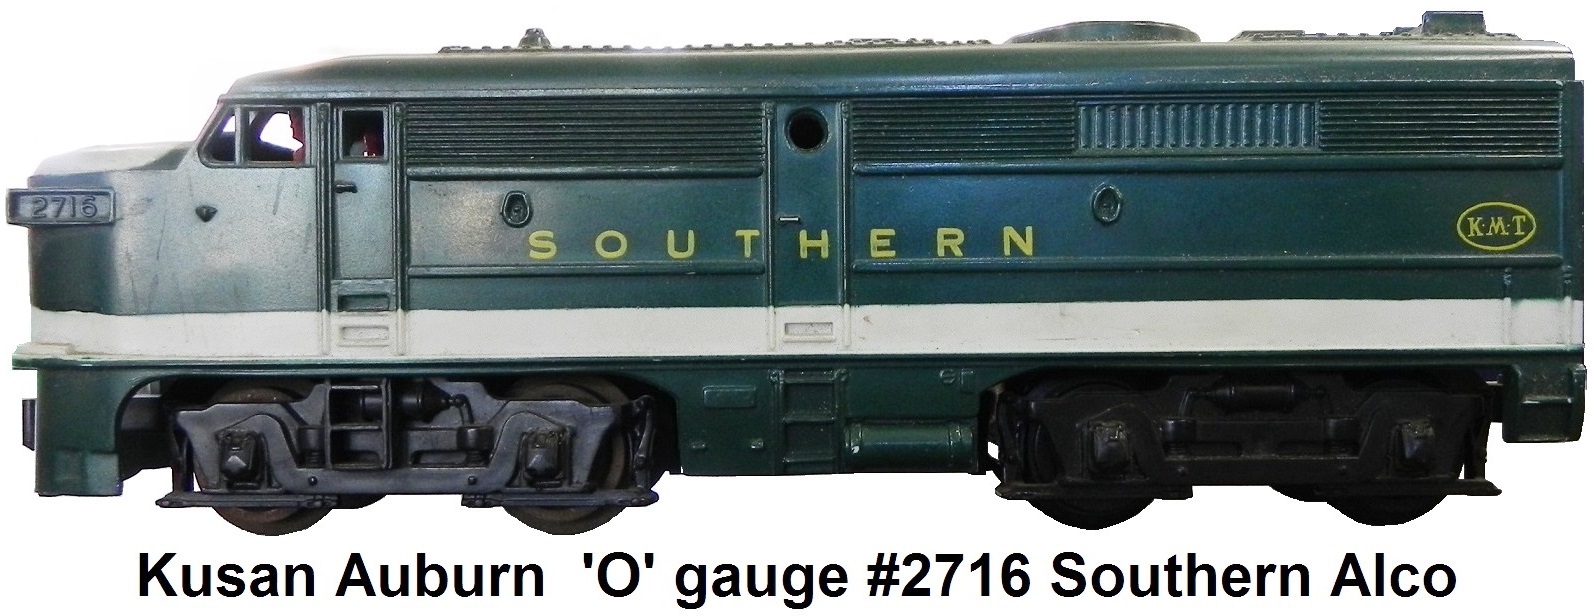 Kusan KMT Auburn Catalog #5 Southern #2716 Alco Engine in 'O' gauge